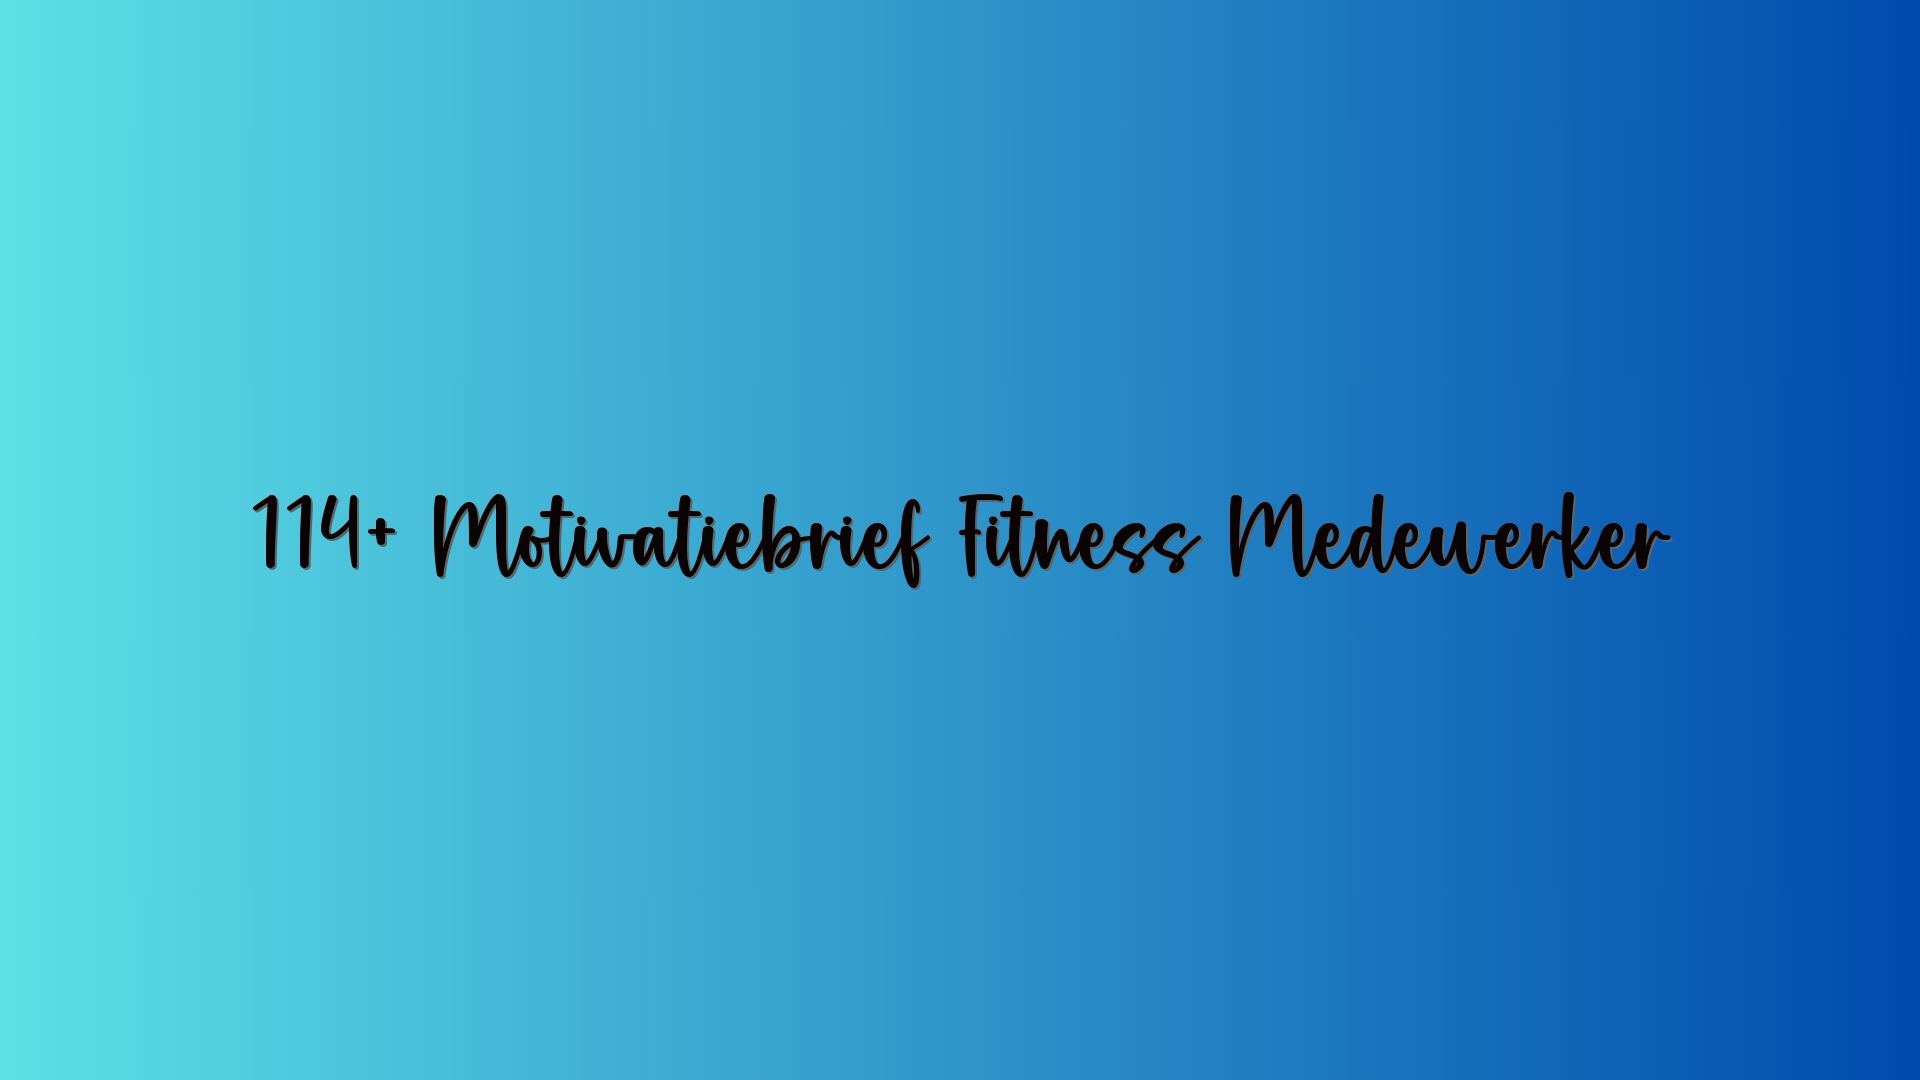 114+ Motivatiebrief Fitness Medewerker